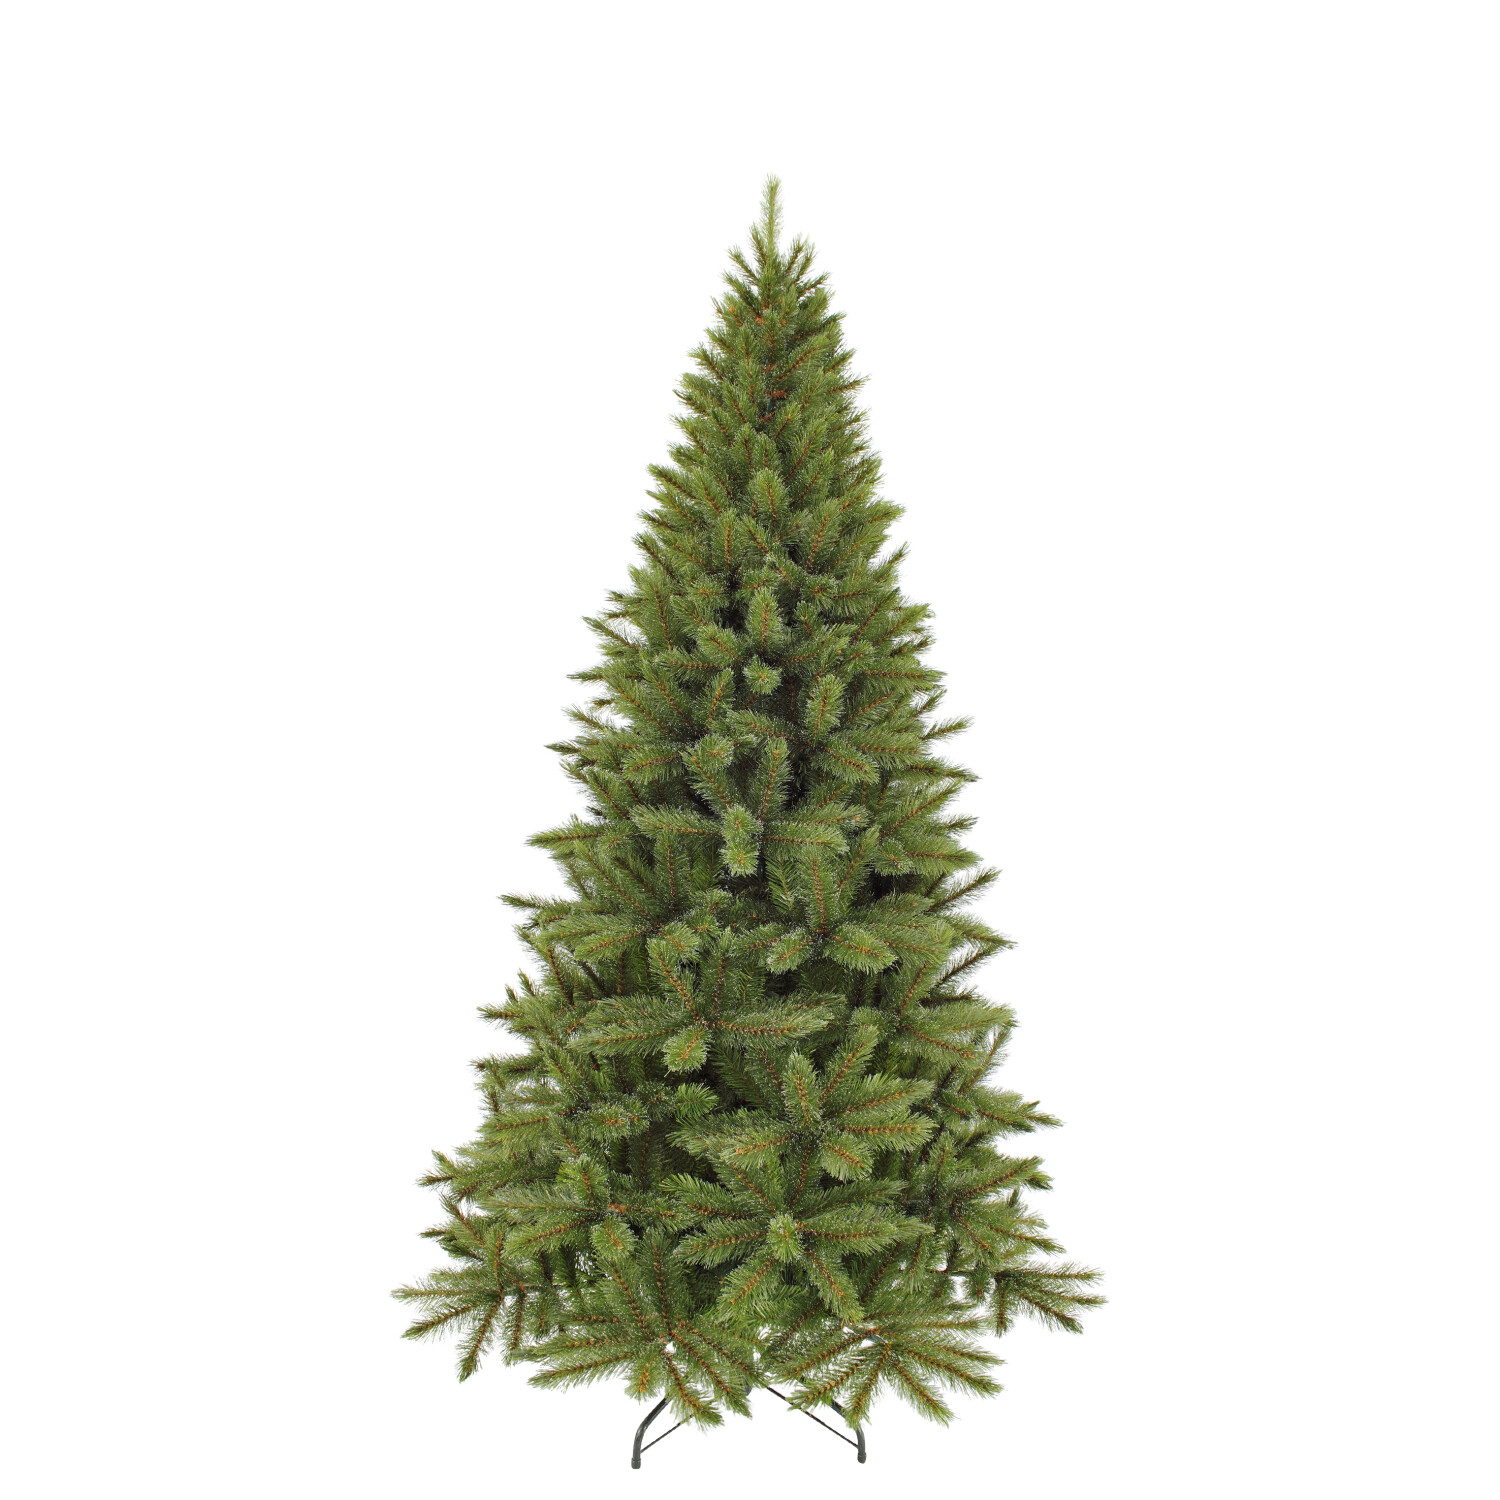 Afbeelding Kerstboom Forest Frosted Slim 215 cm groen triumph tree door Tuinadvies.be